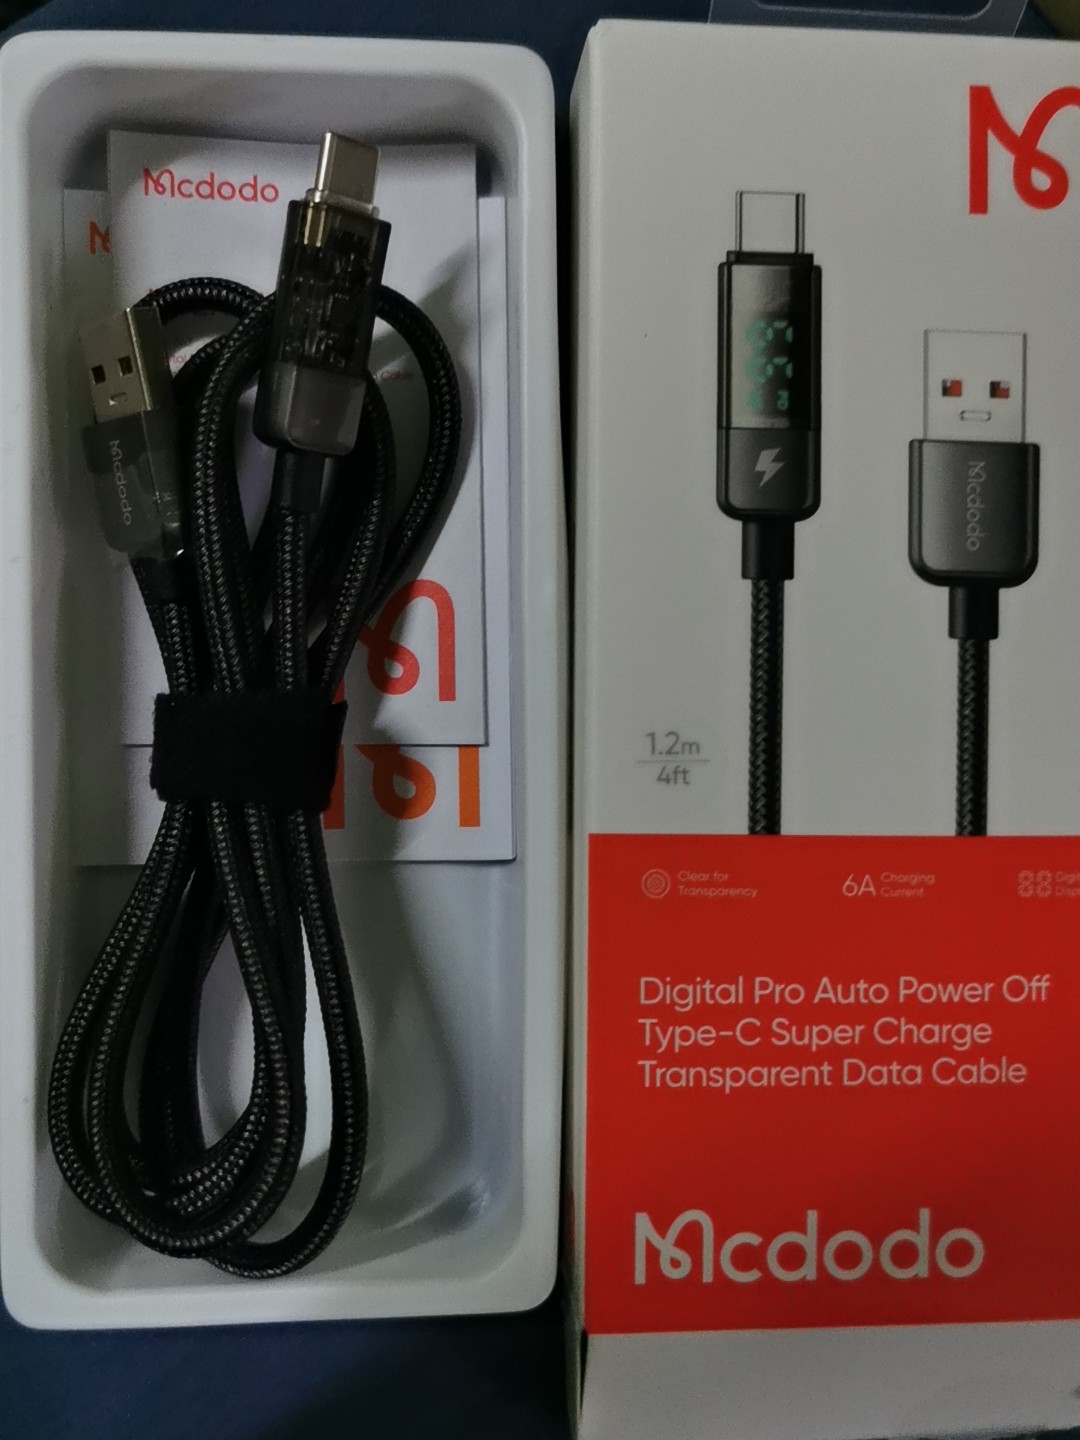 MCDODO CA-3630 100W Digital Pro Auto Power Off Transparent USB